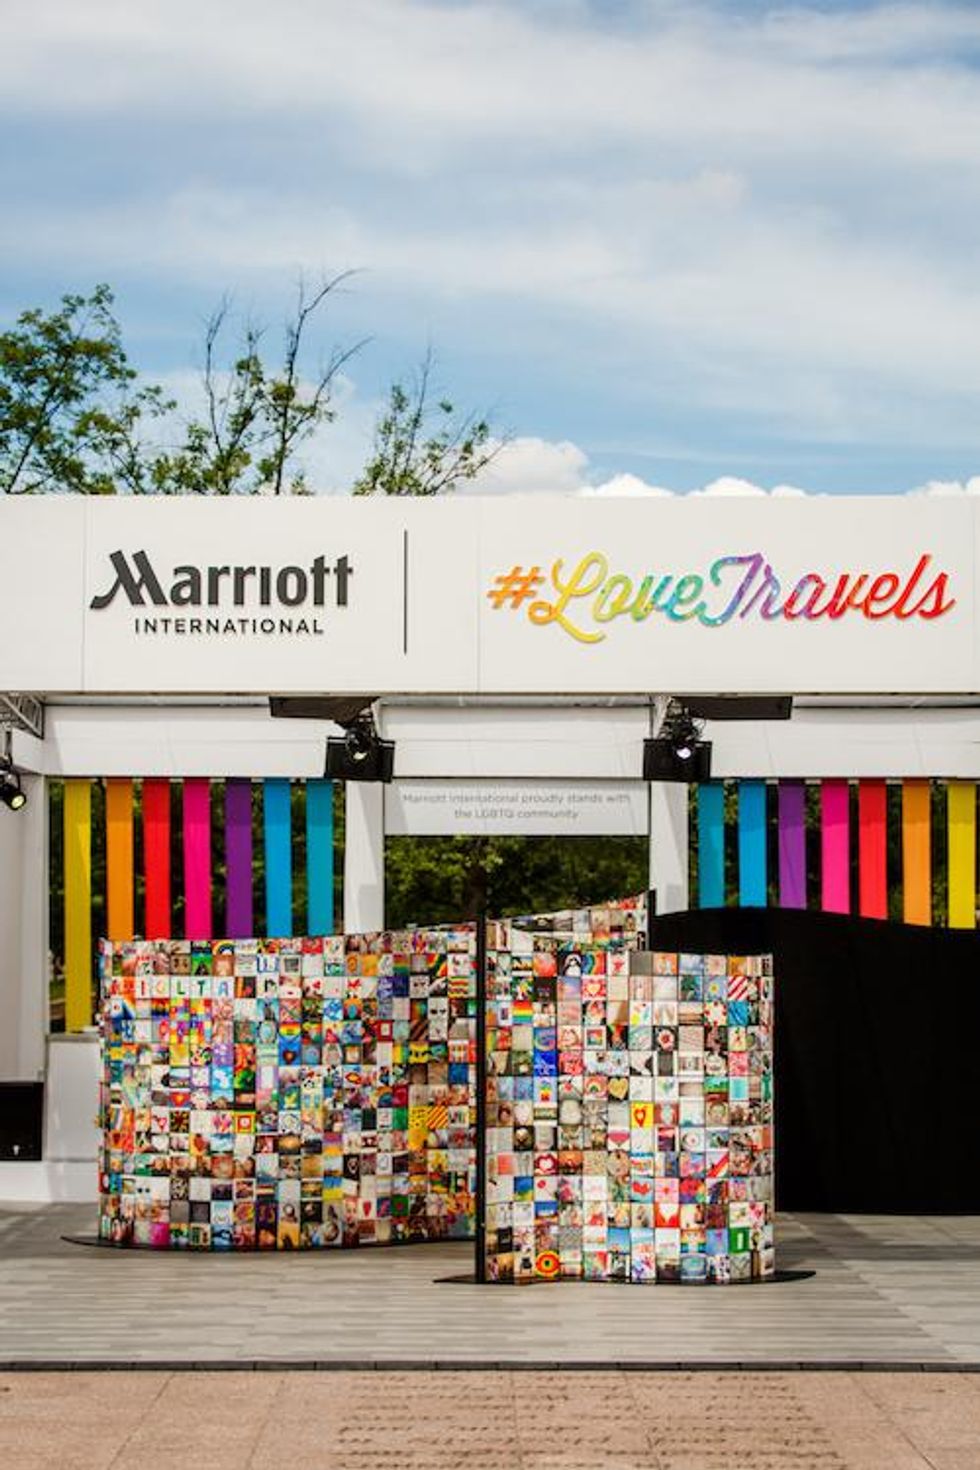 Marriott #LoveTravels